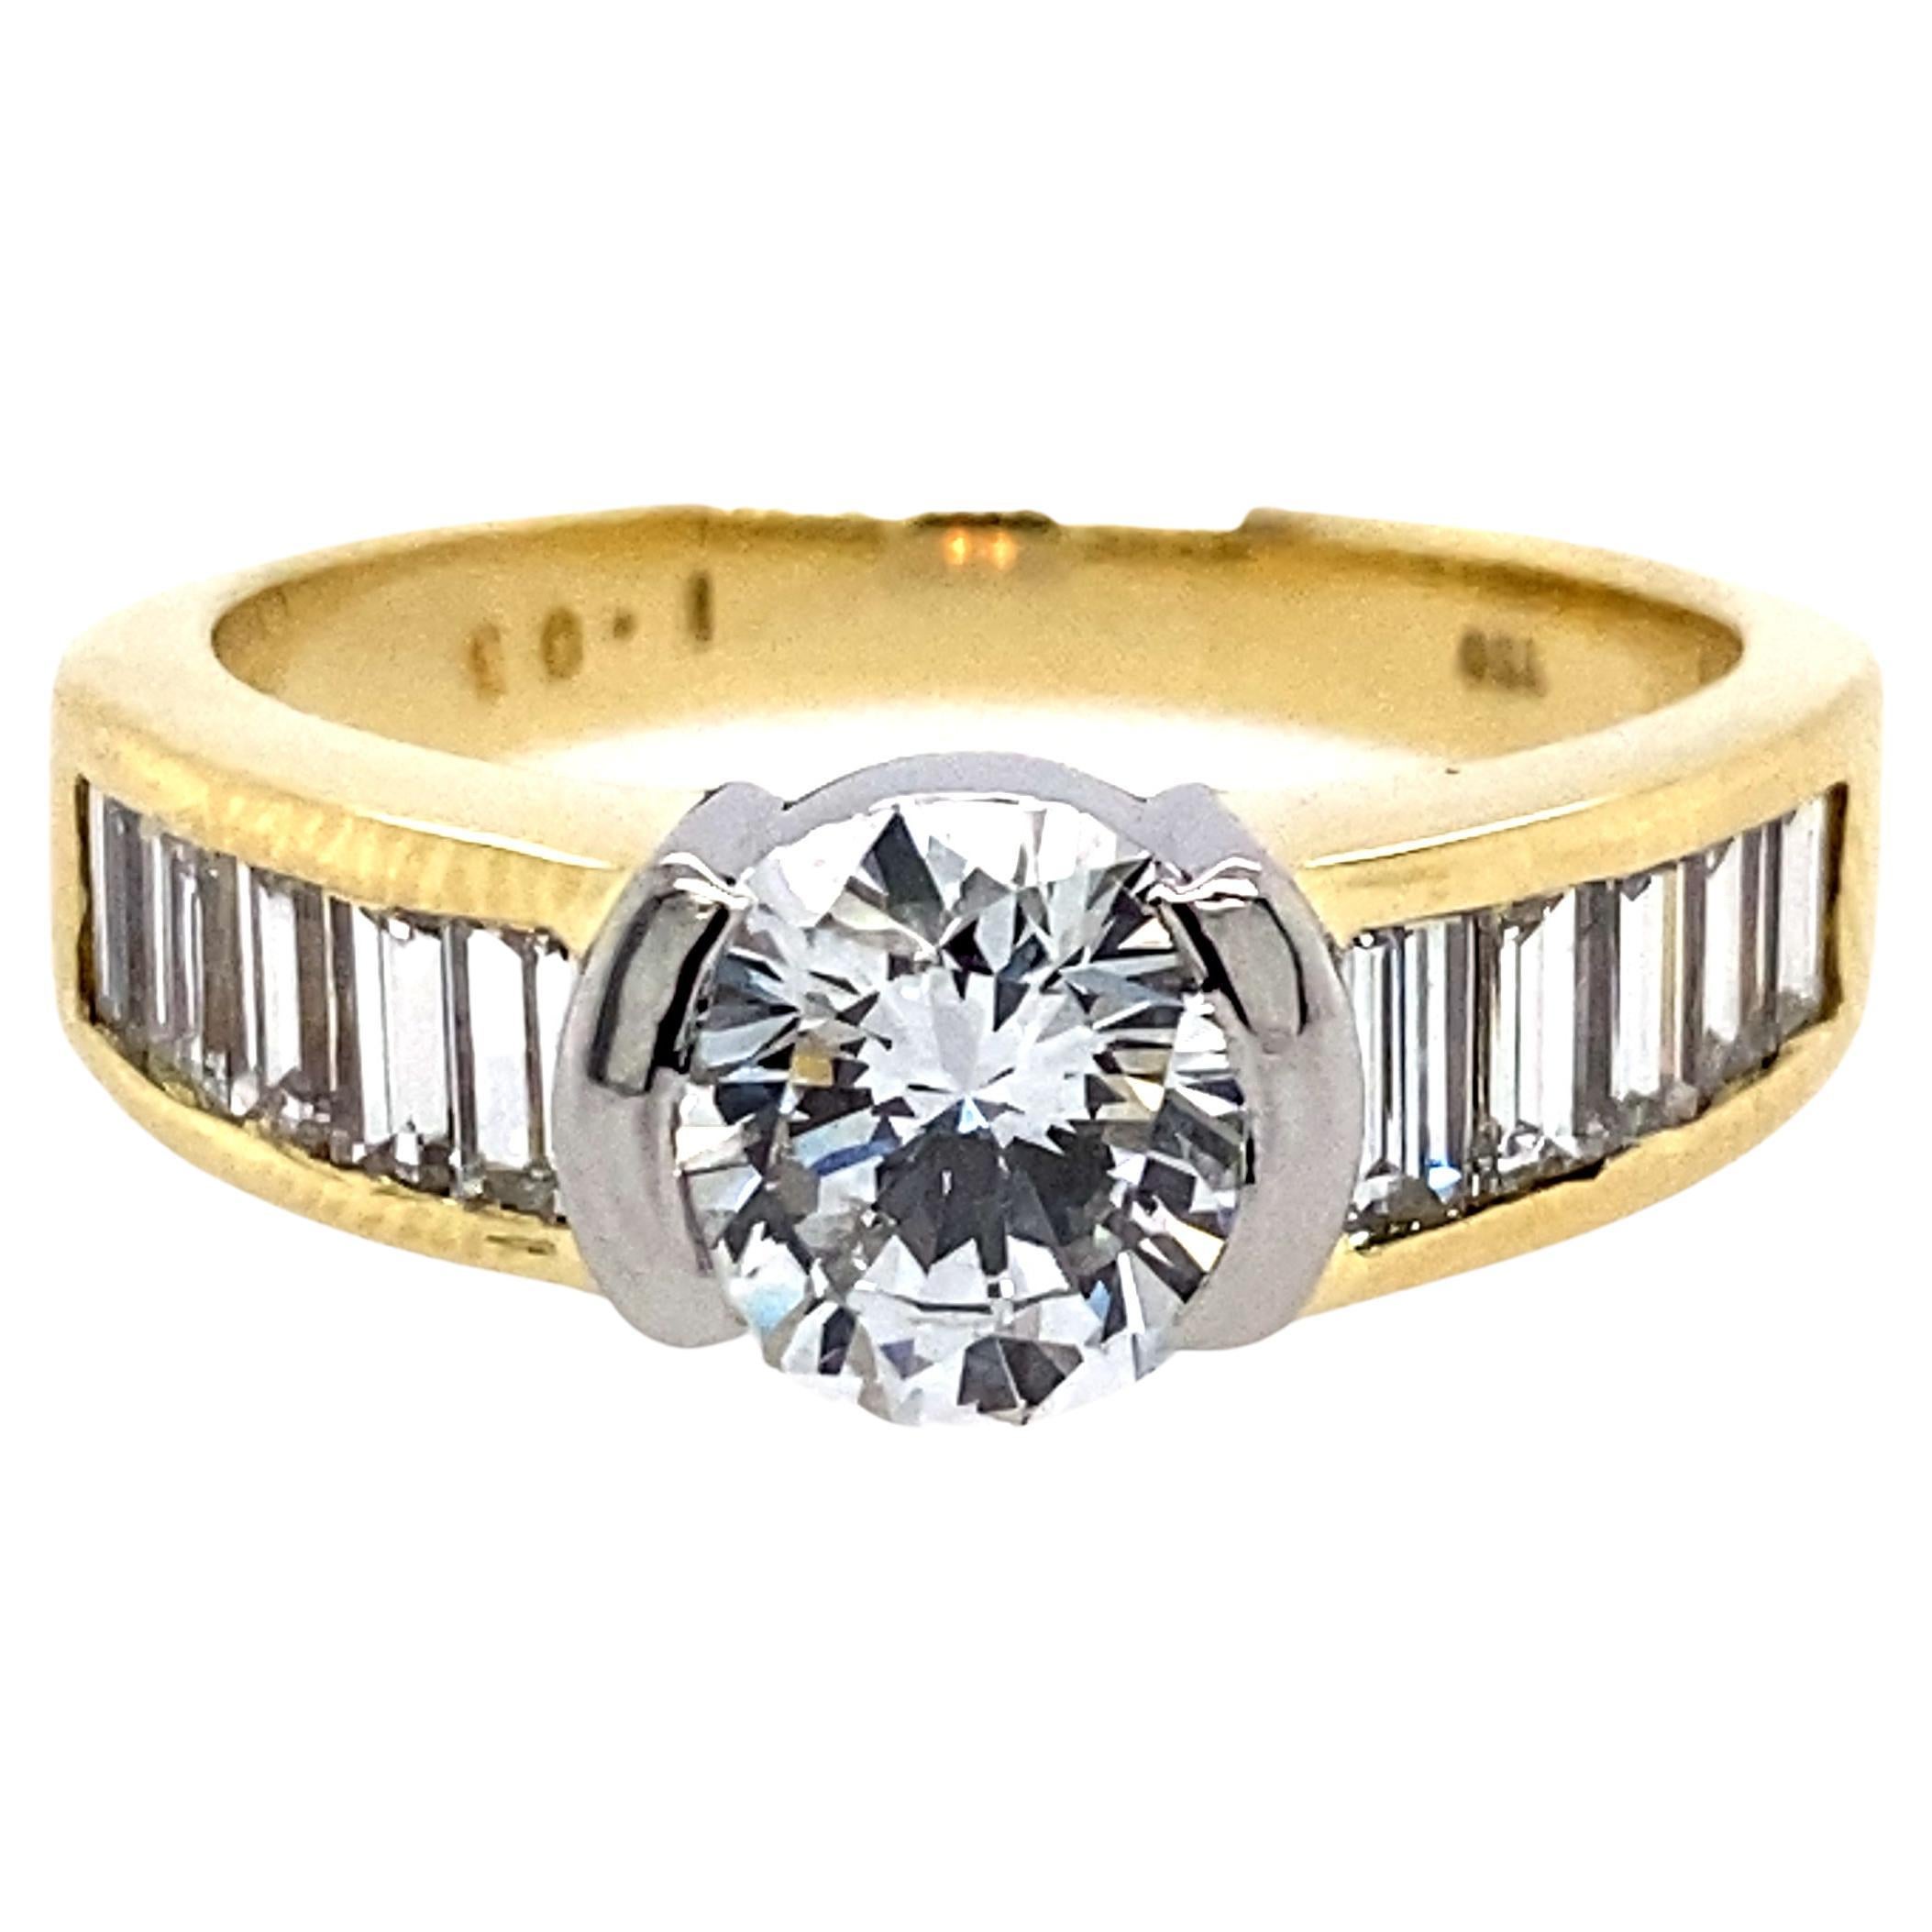 Tiffany & Co. 18k Gold, Platinum and Diamond Ring